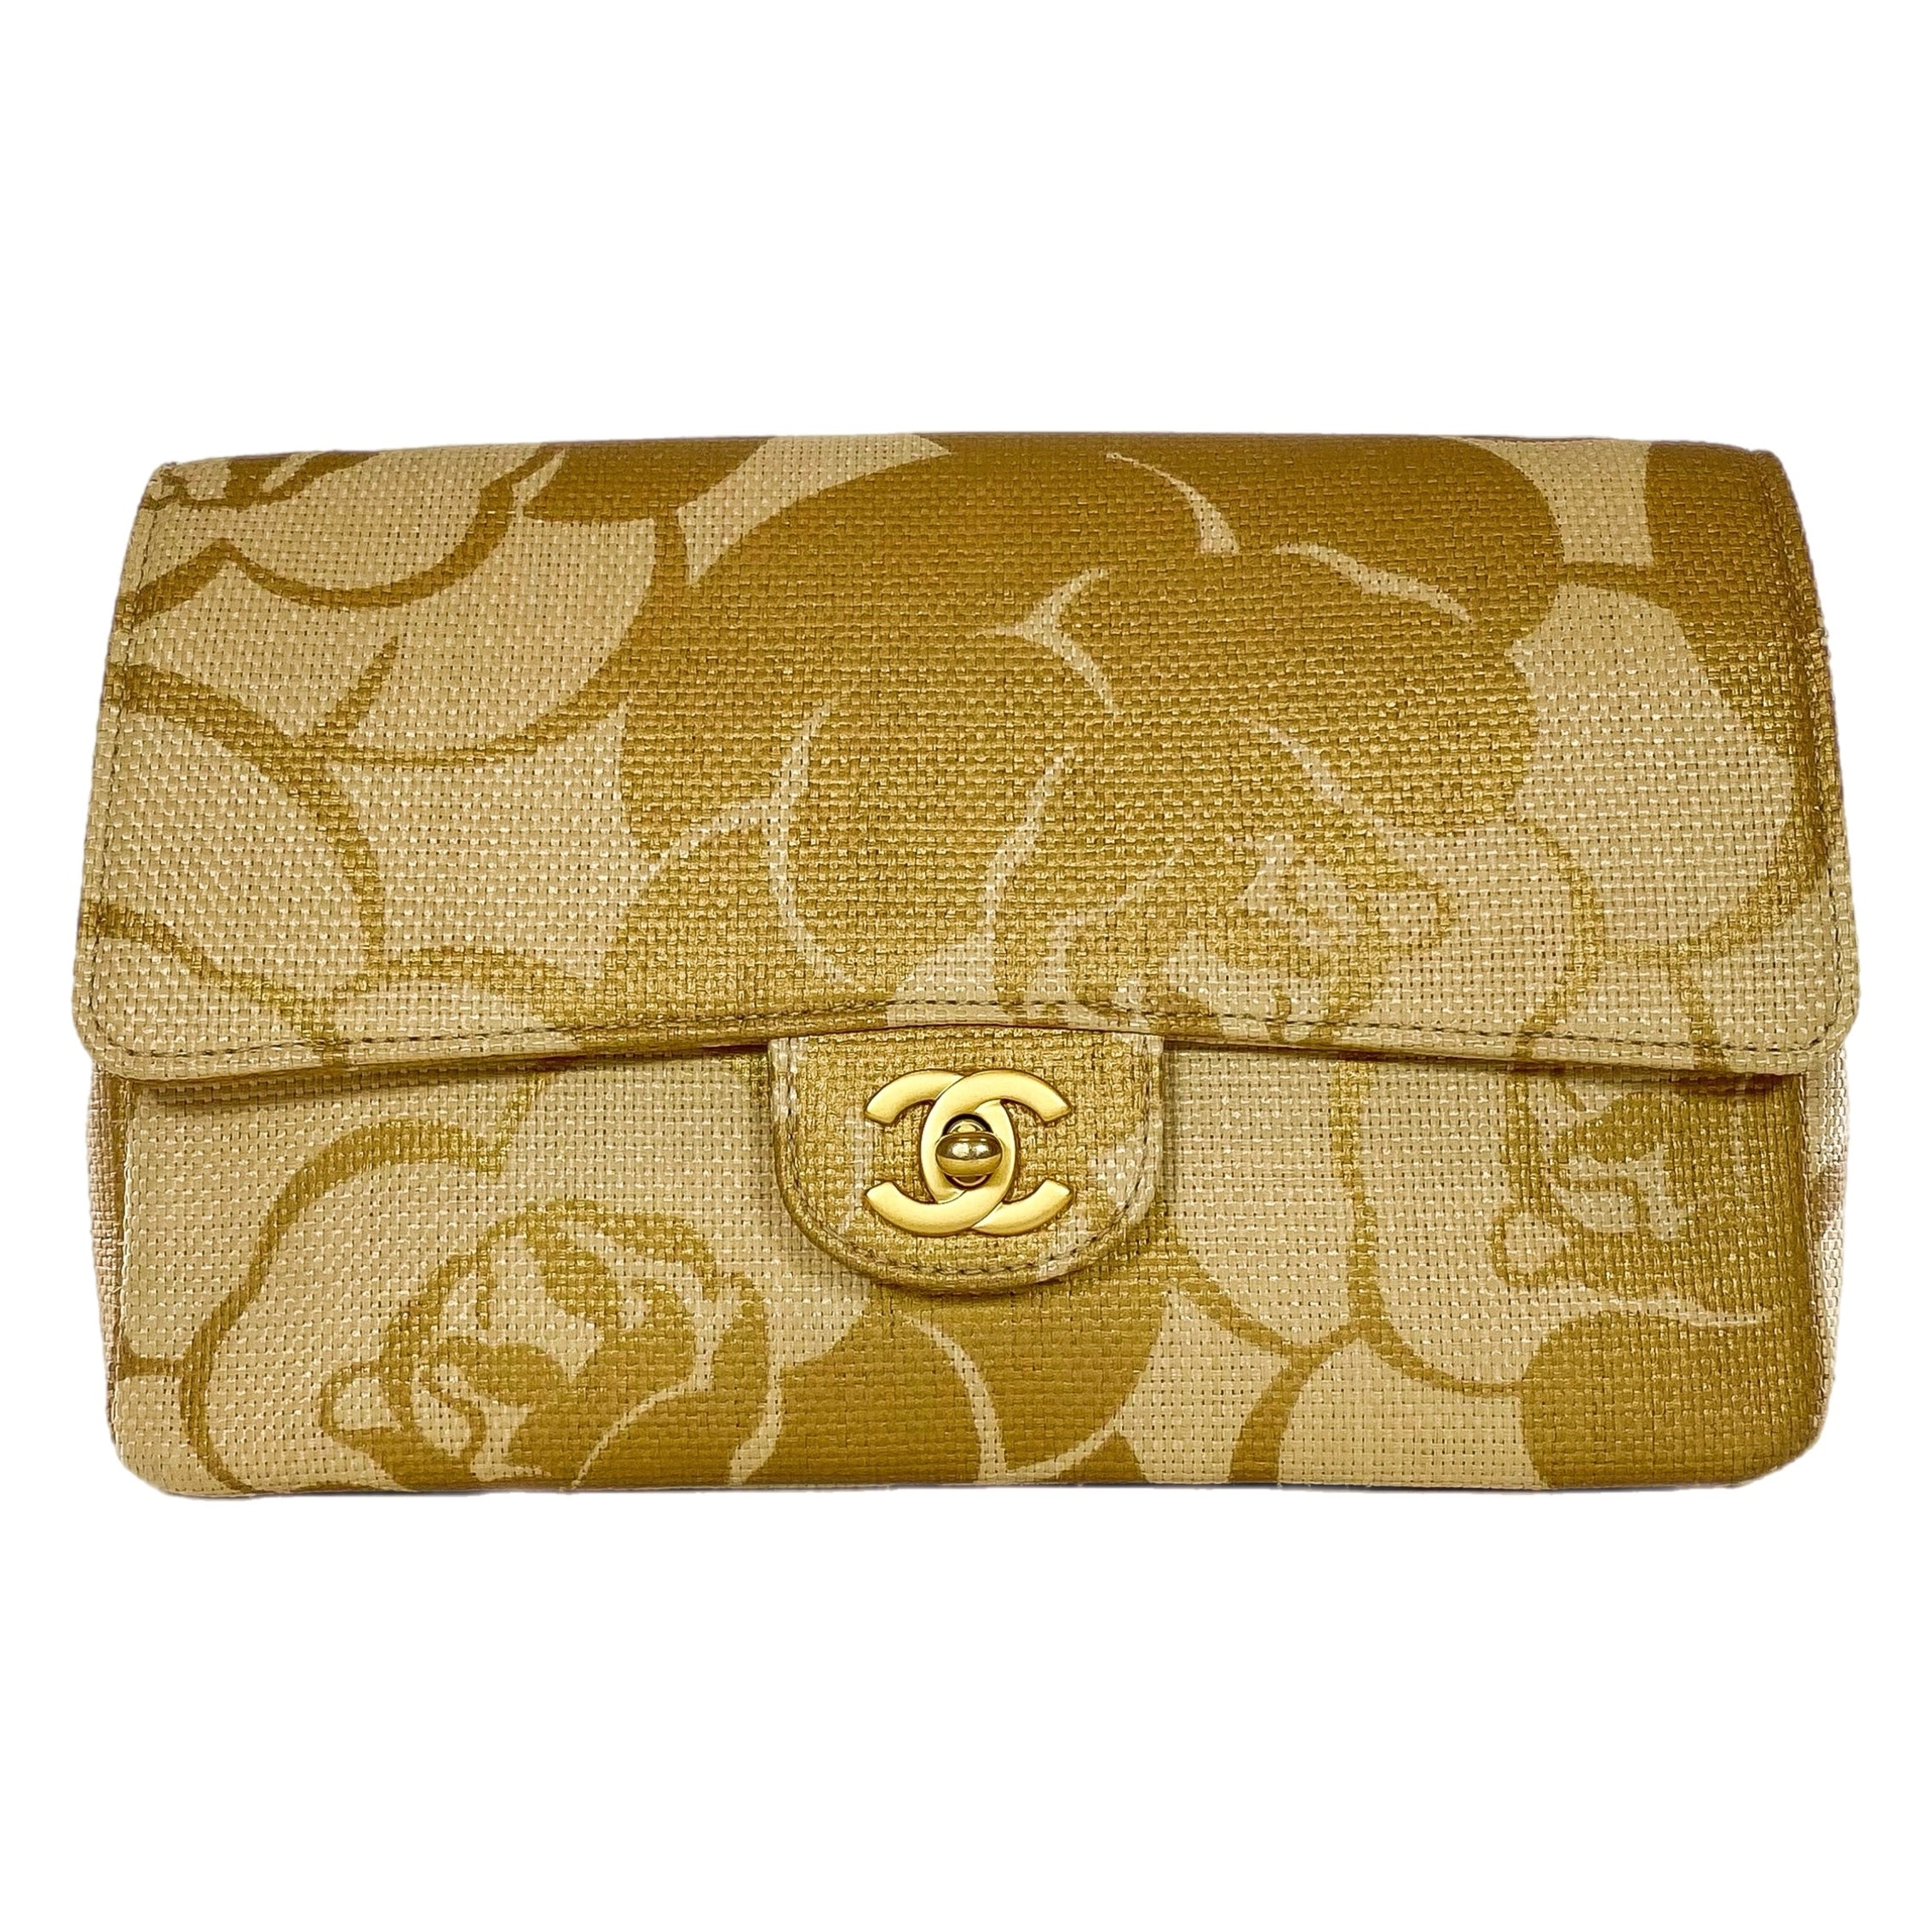 Chanel Camellia Print Medium Raffia Flap Bag